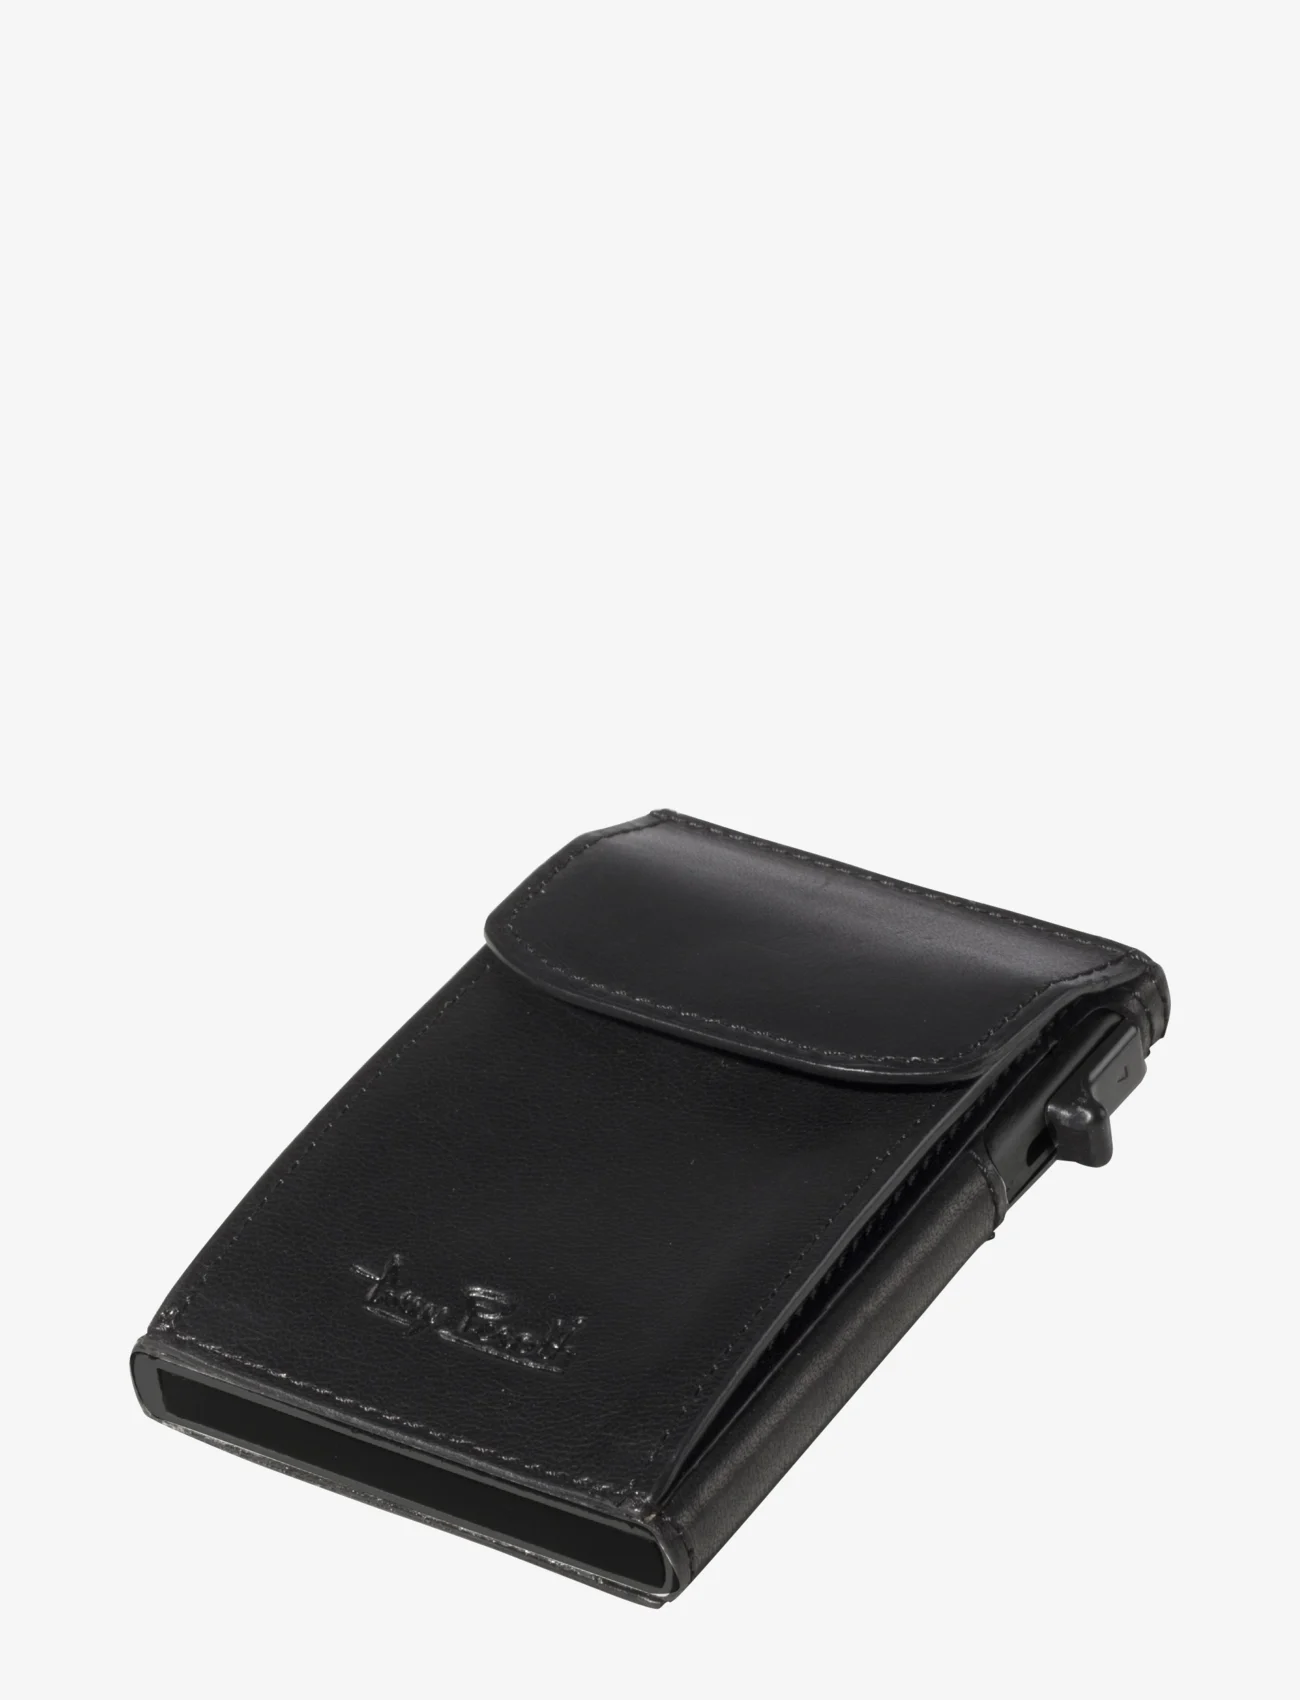 Tony Perotti - Furbo Slim Cardholder with coin pocket - card holders - black - 1